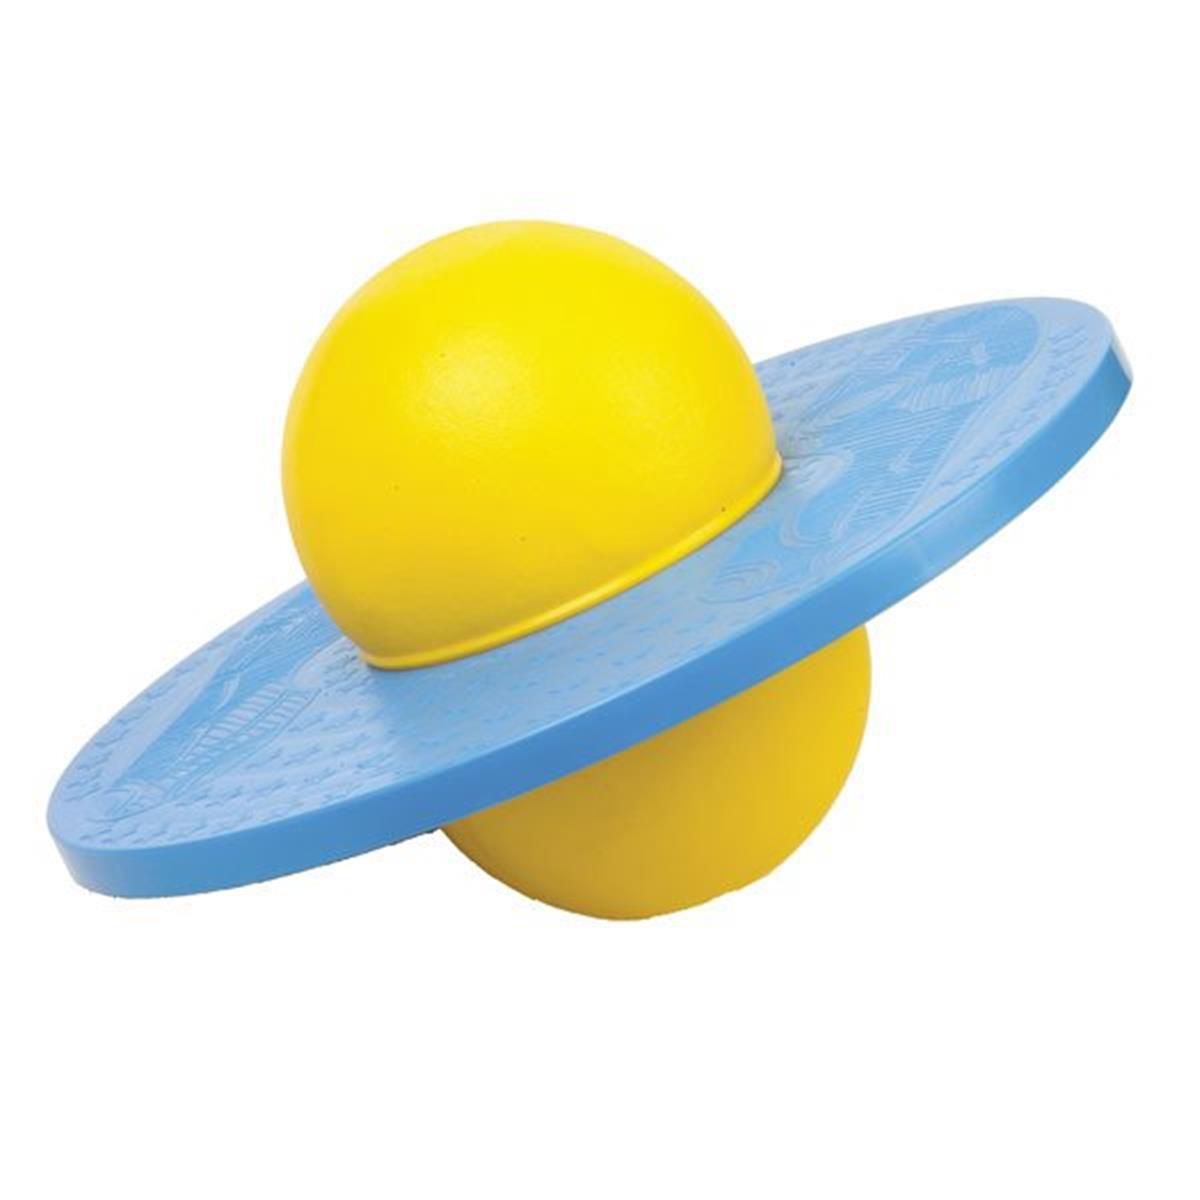 Image for HappyHealth Happyhealth Balance Platform Ball Yellow & Blue at Kohl's.